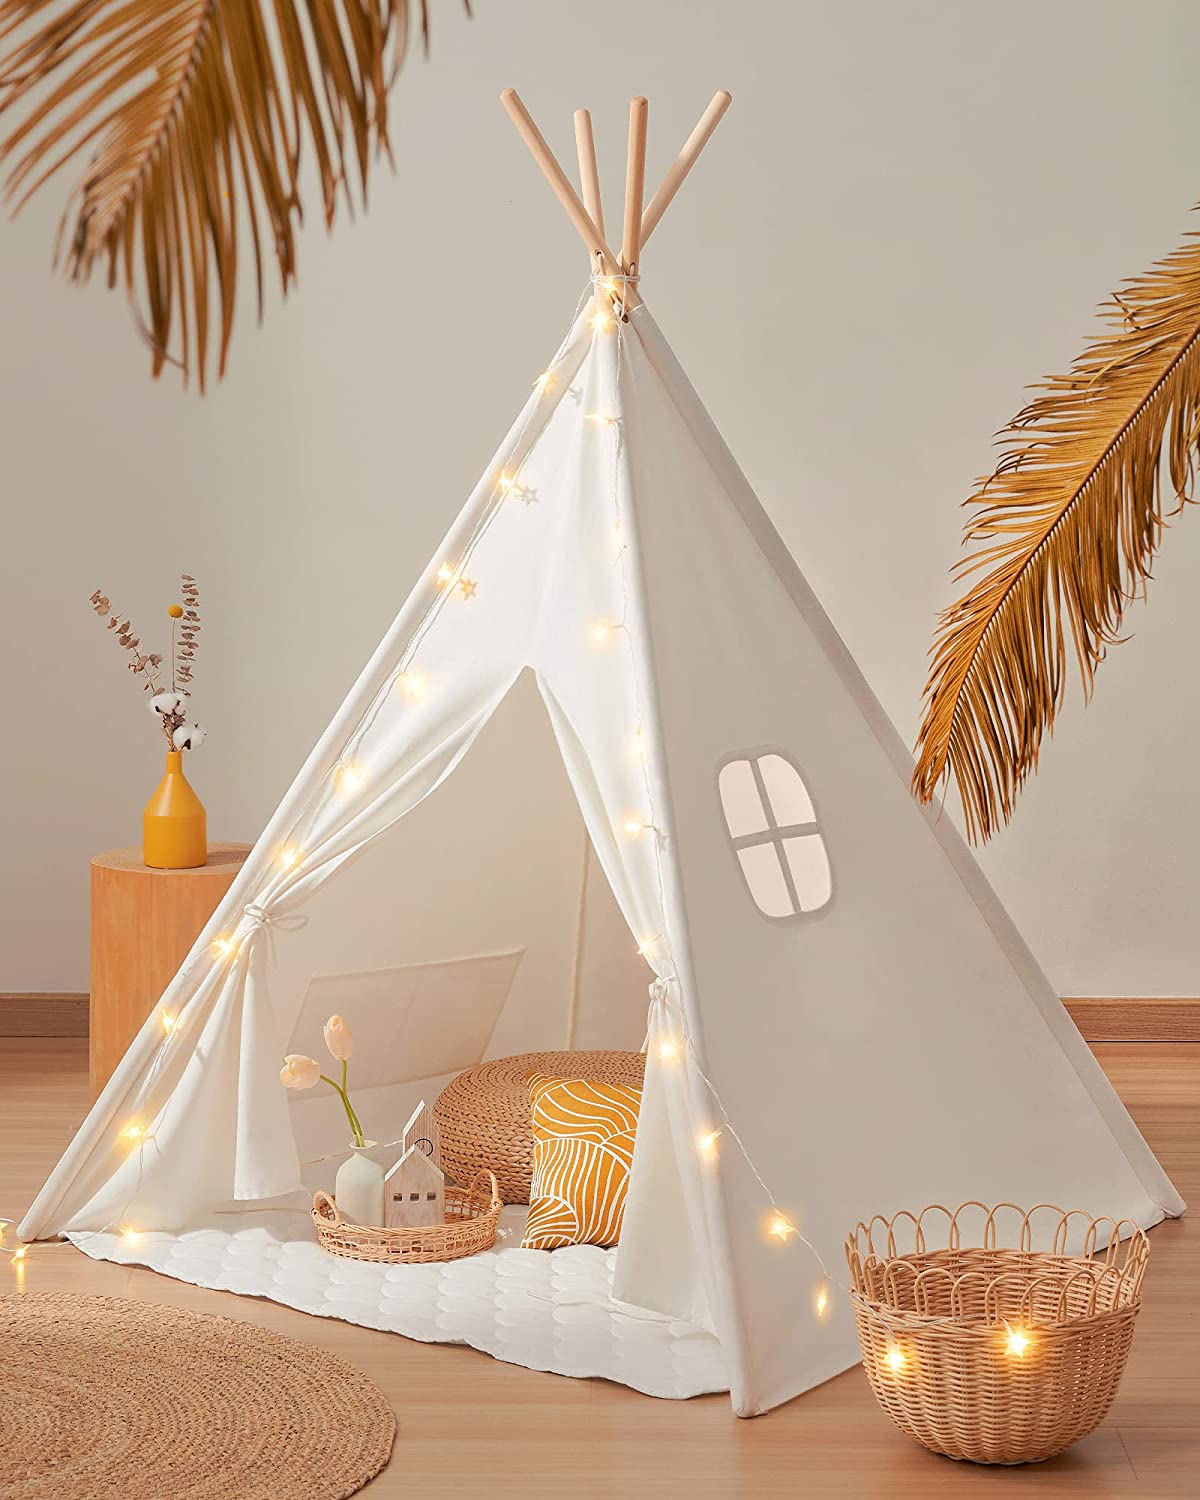 https://www.dontwasteyourmoney.com/wp-content/uploads/2021/11/tiny-land-string-lights-padded-matt-teepee-kids-tent.jpg